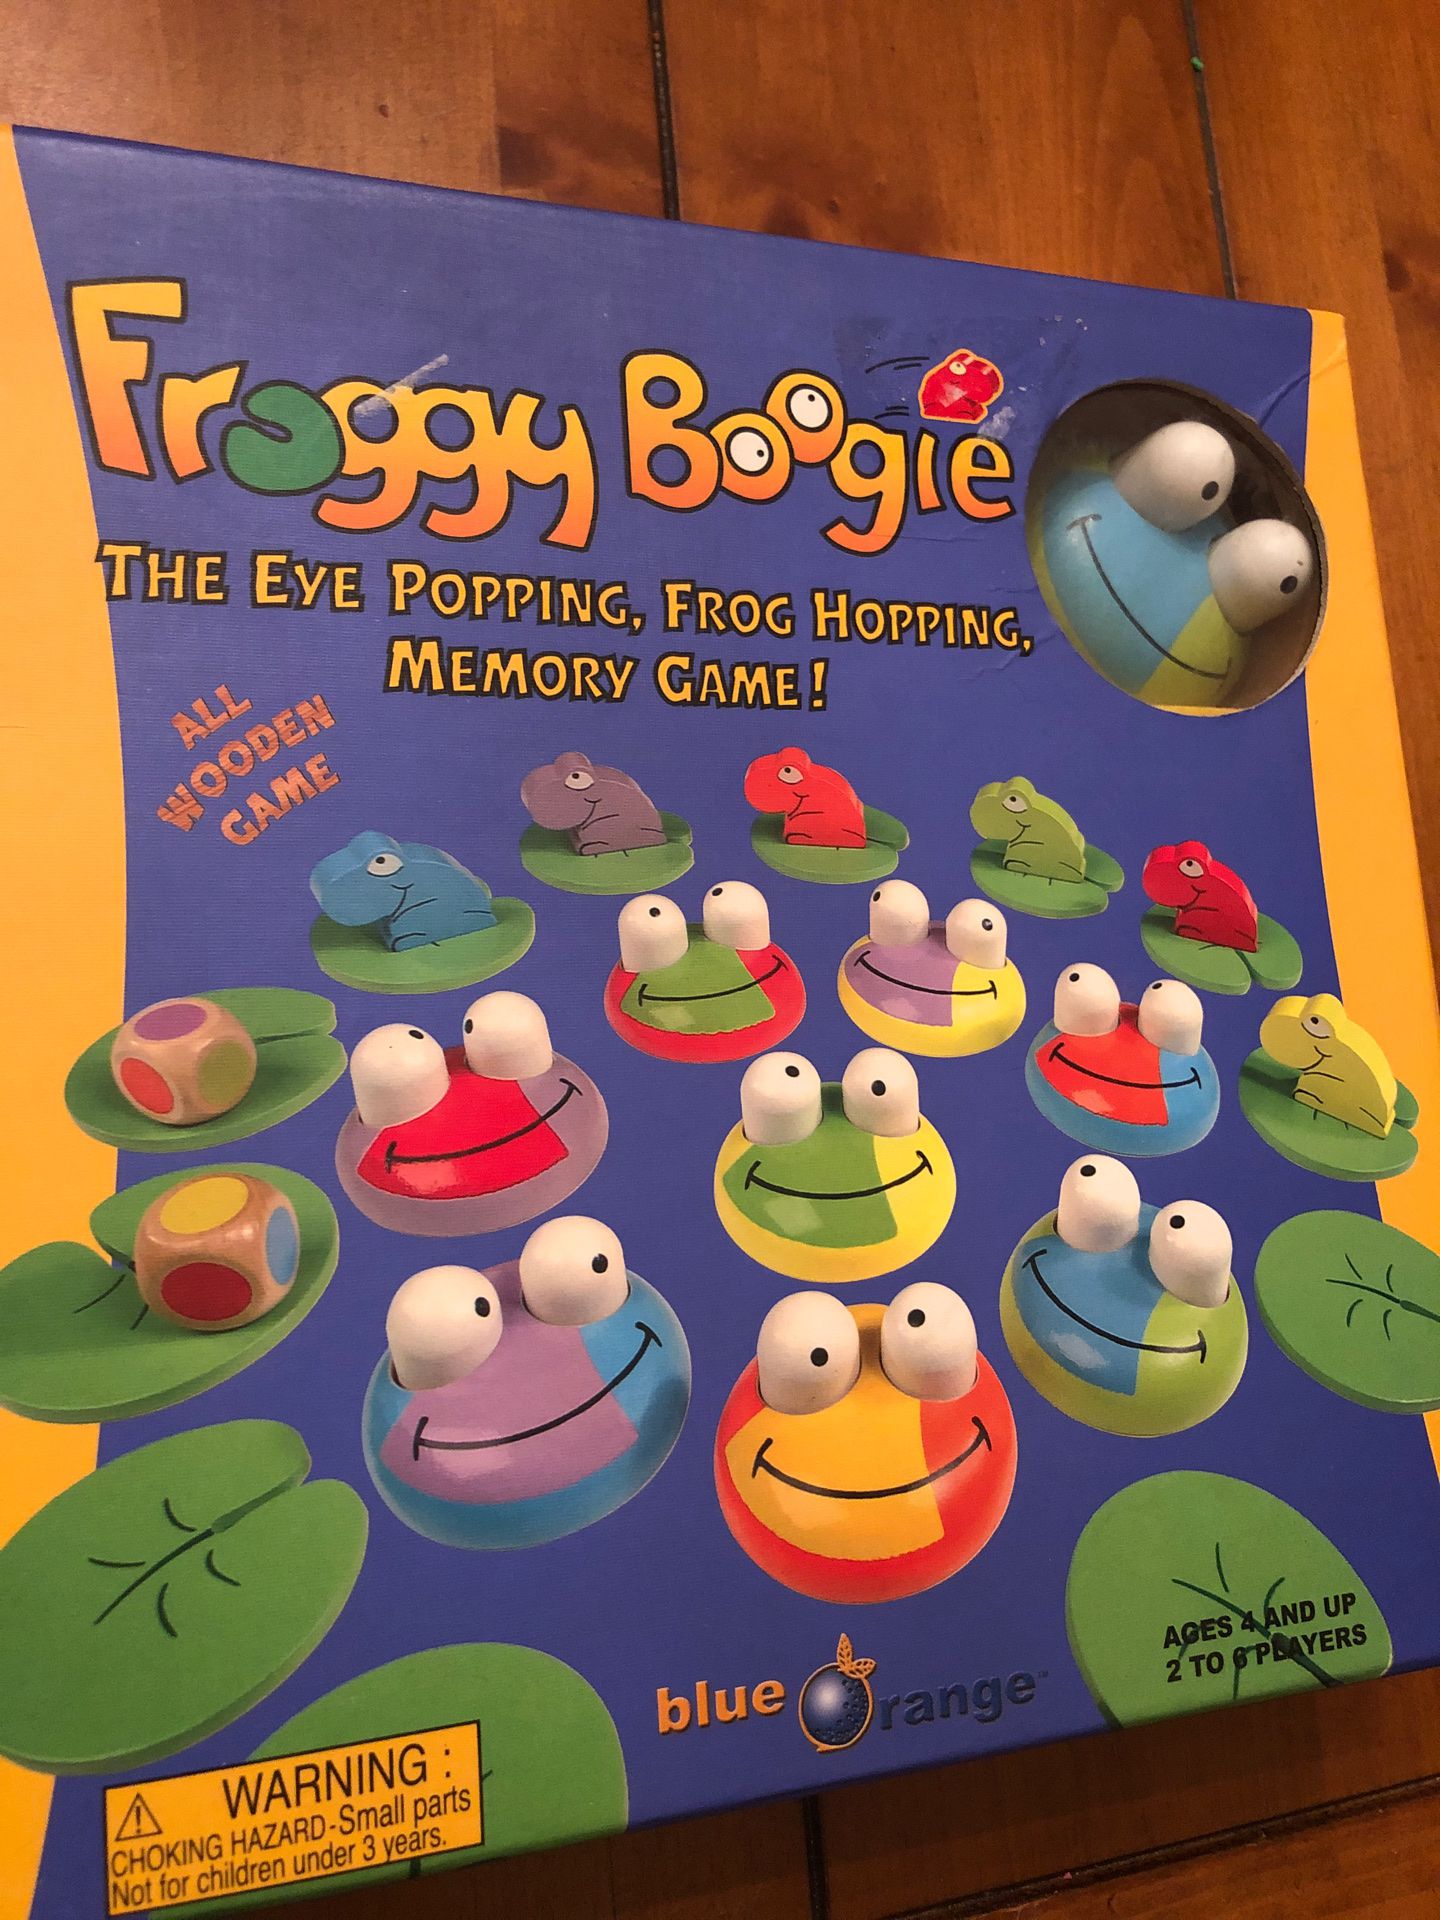 Froggie Boogie - wooden memory game